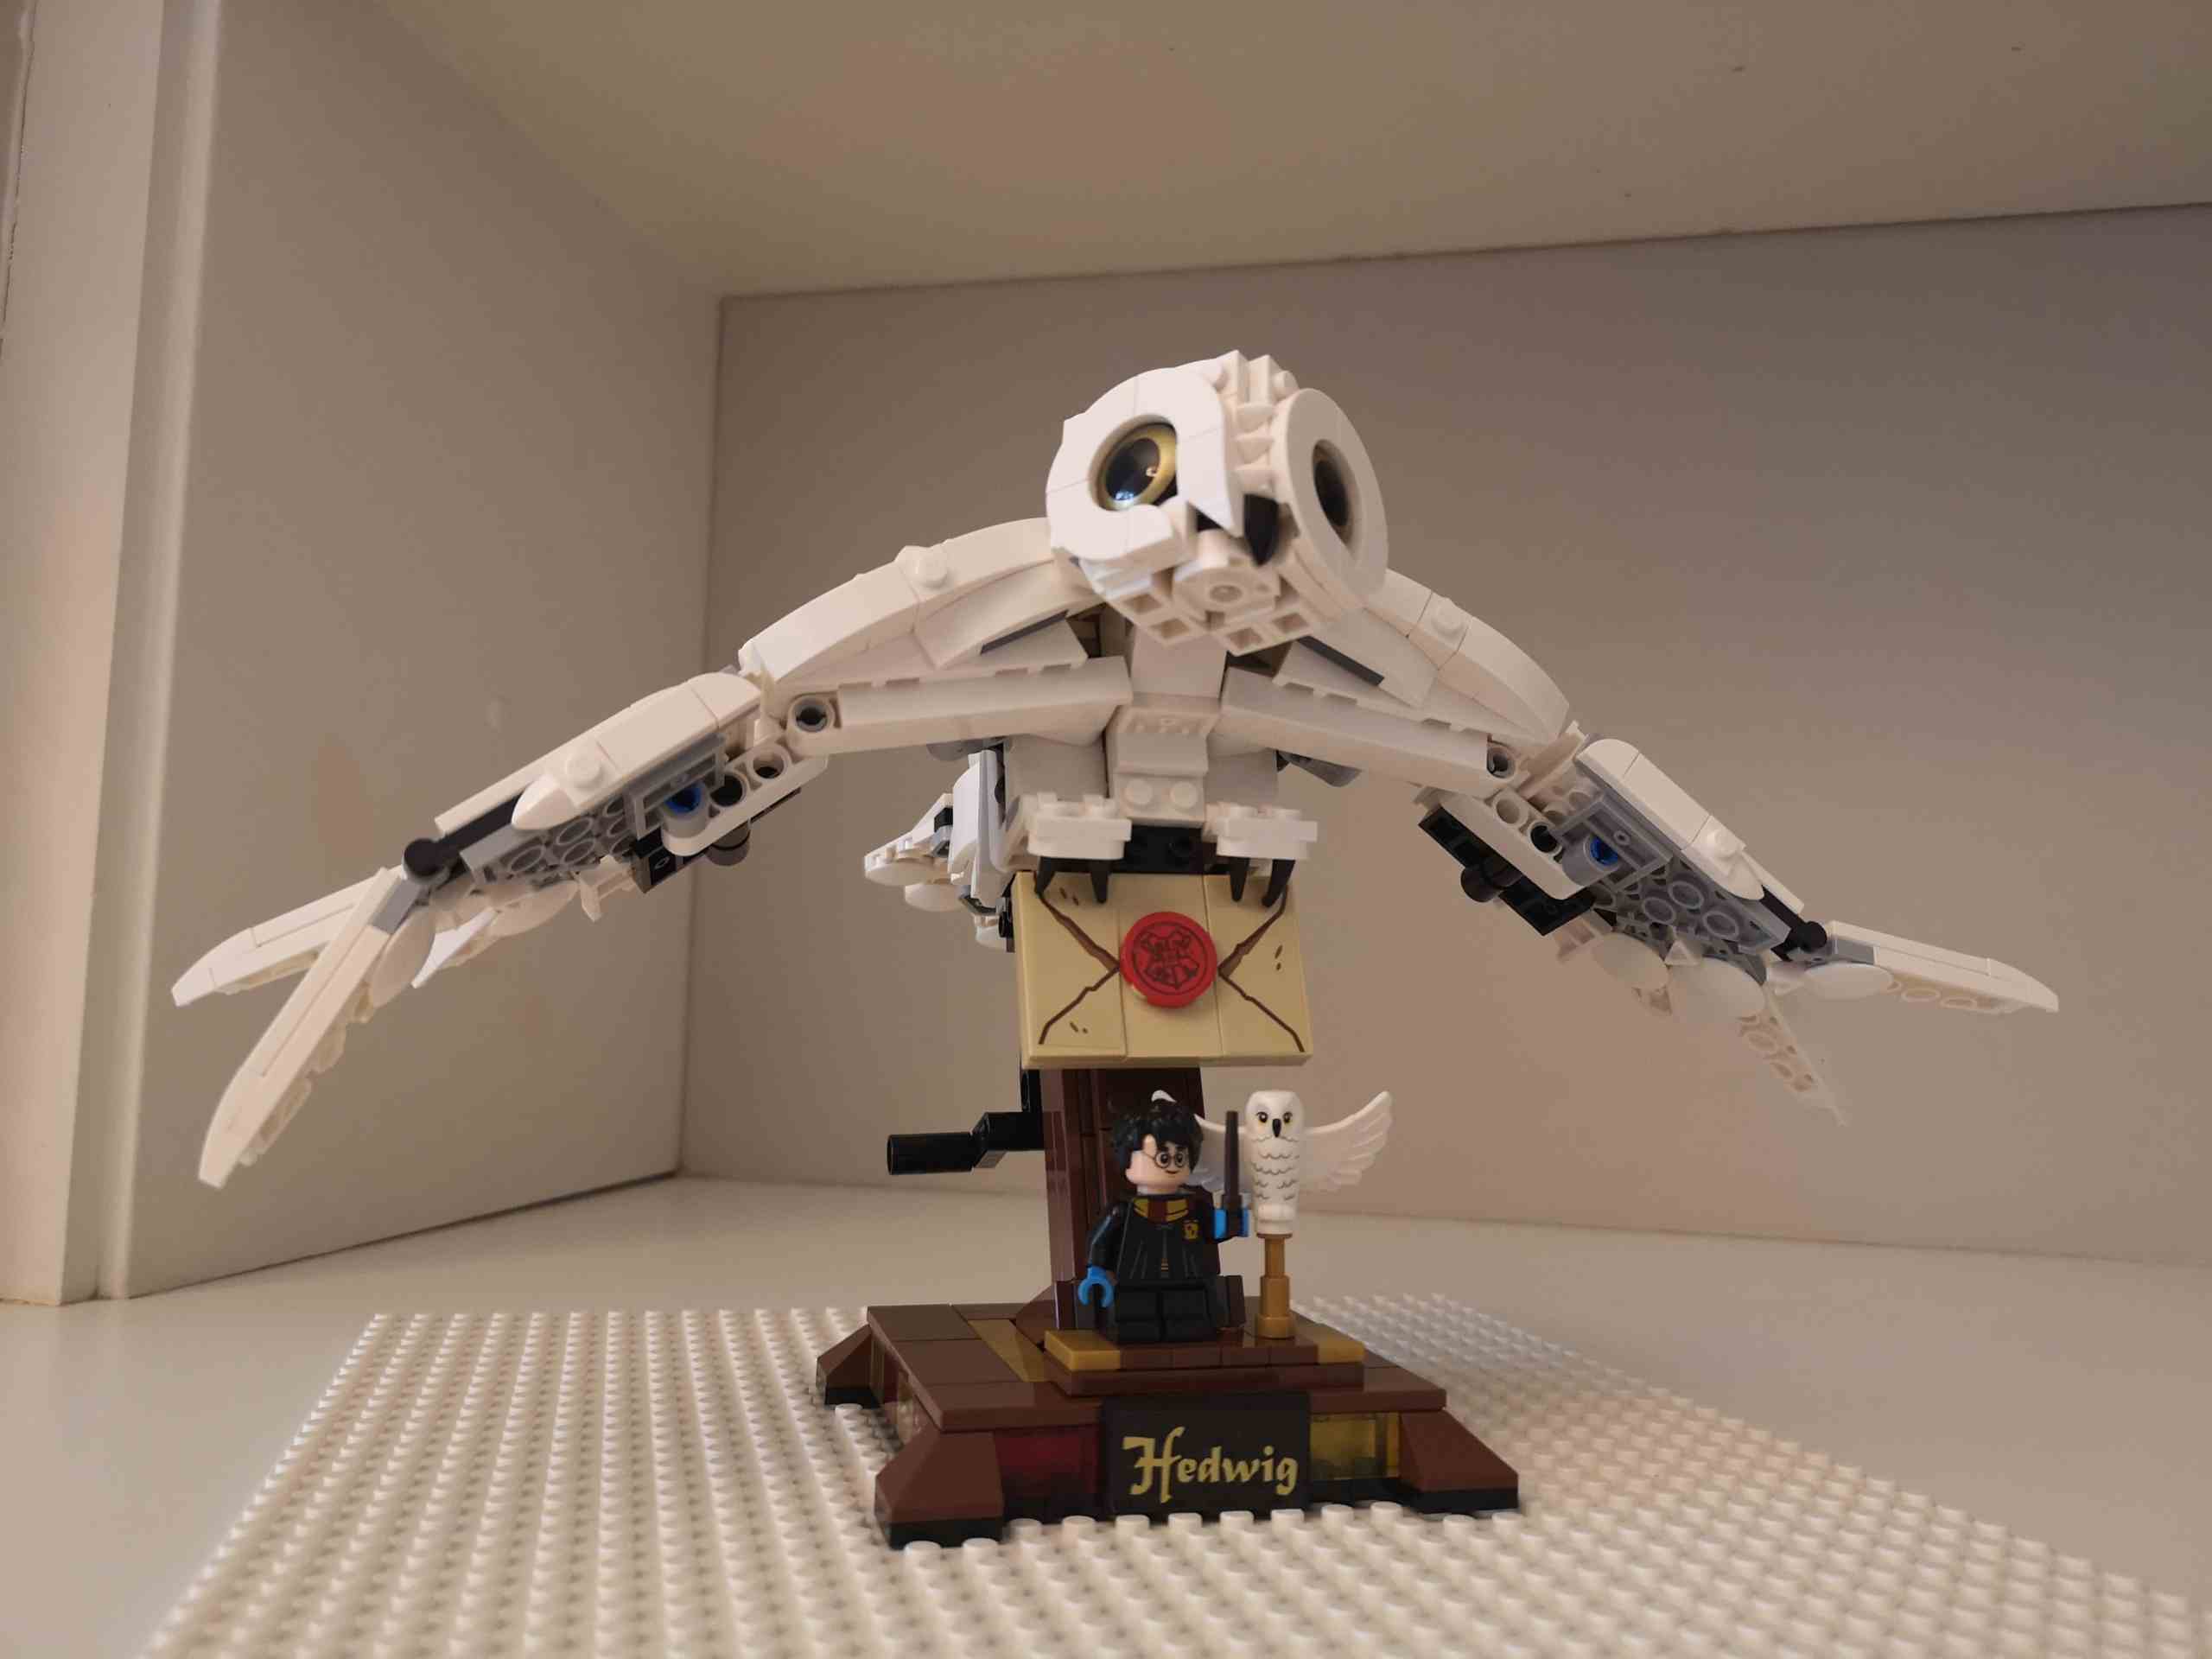 Rafael Lego master Harry Potter Hedwig